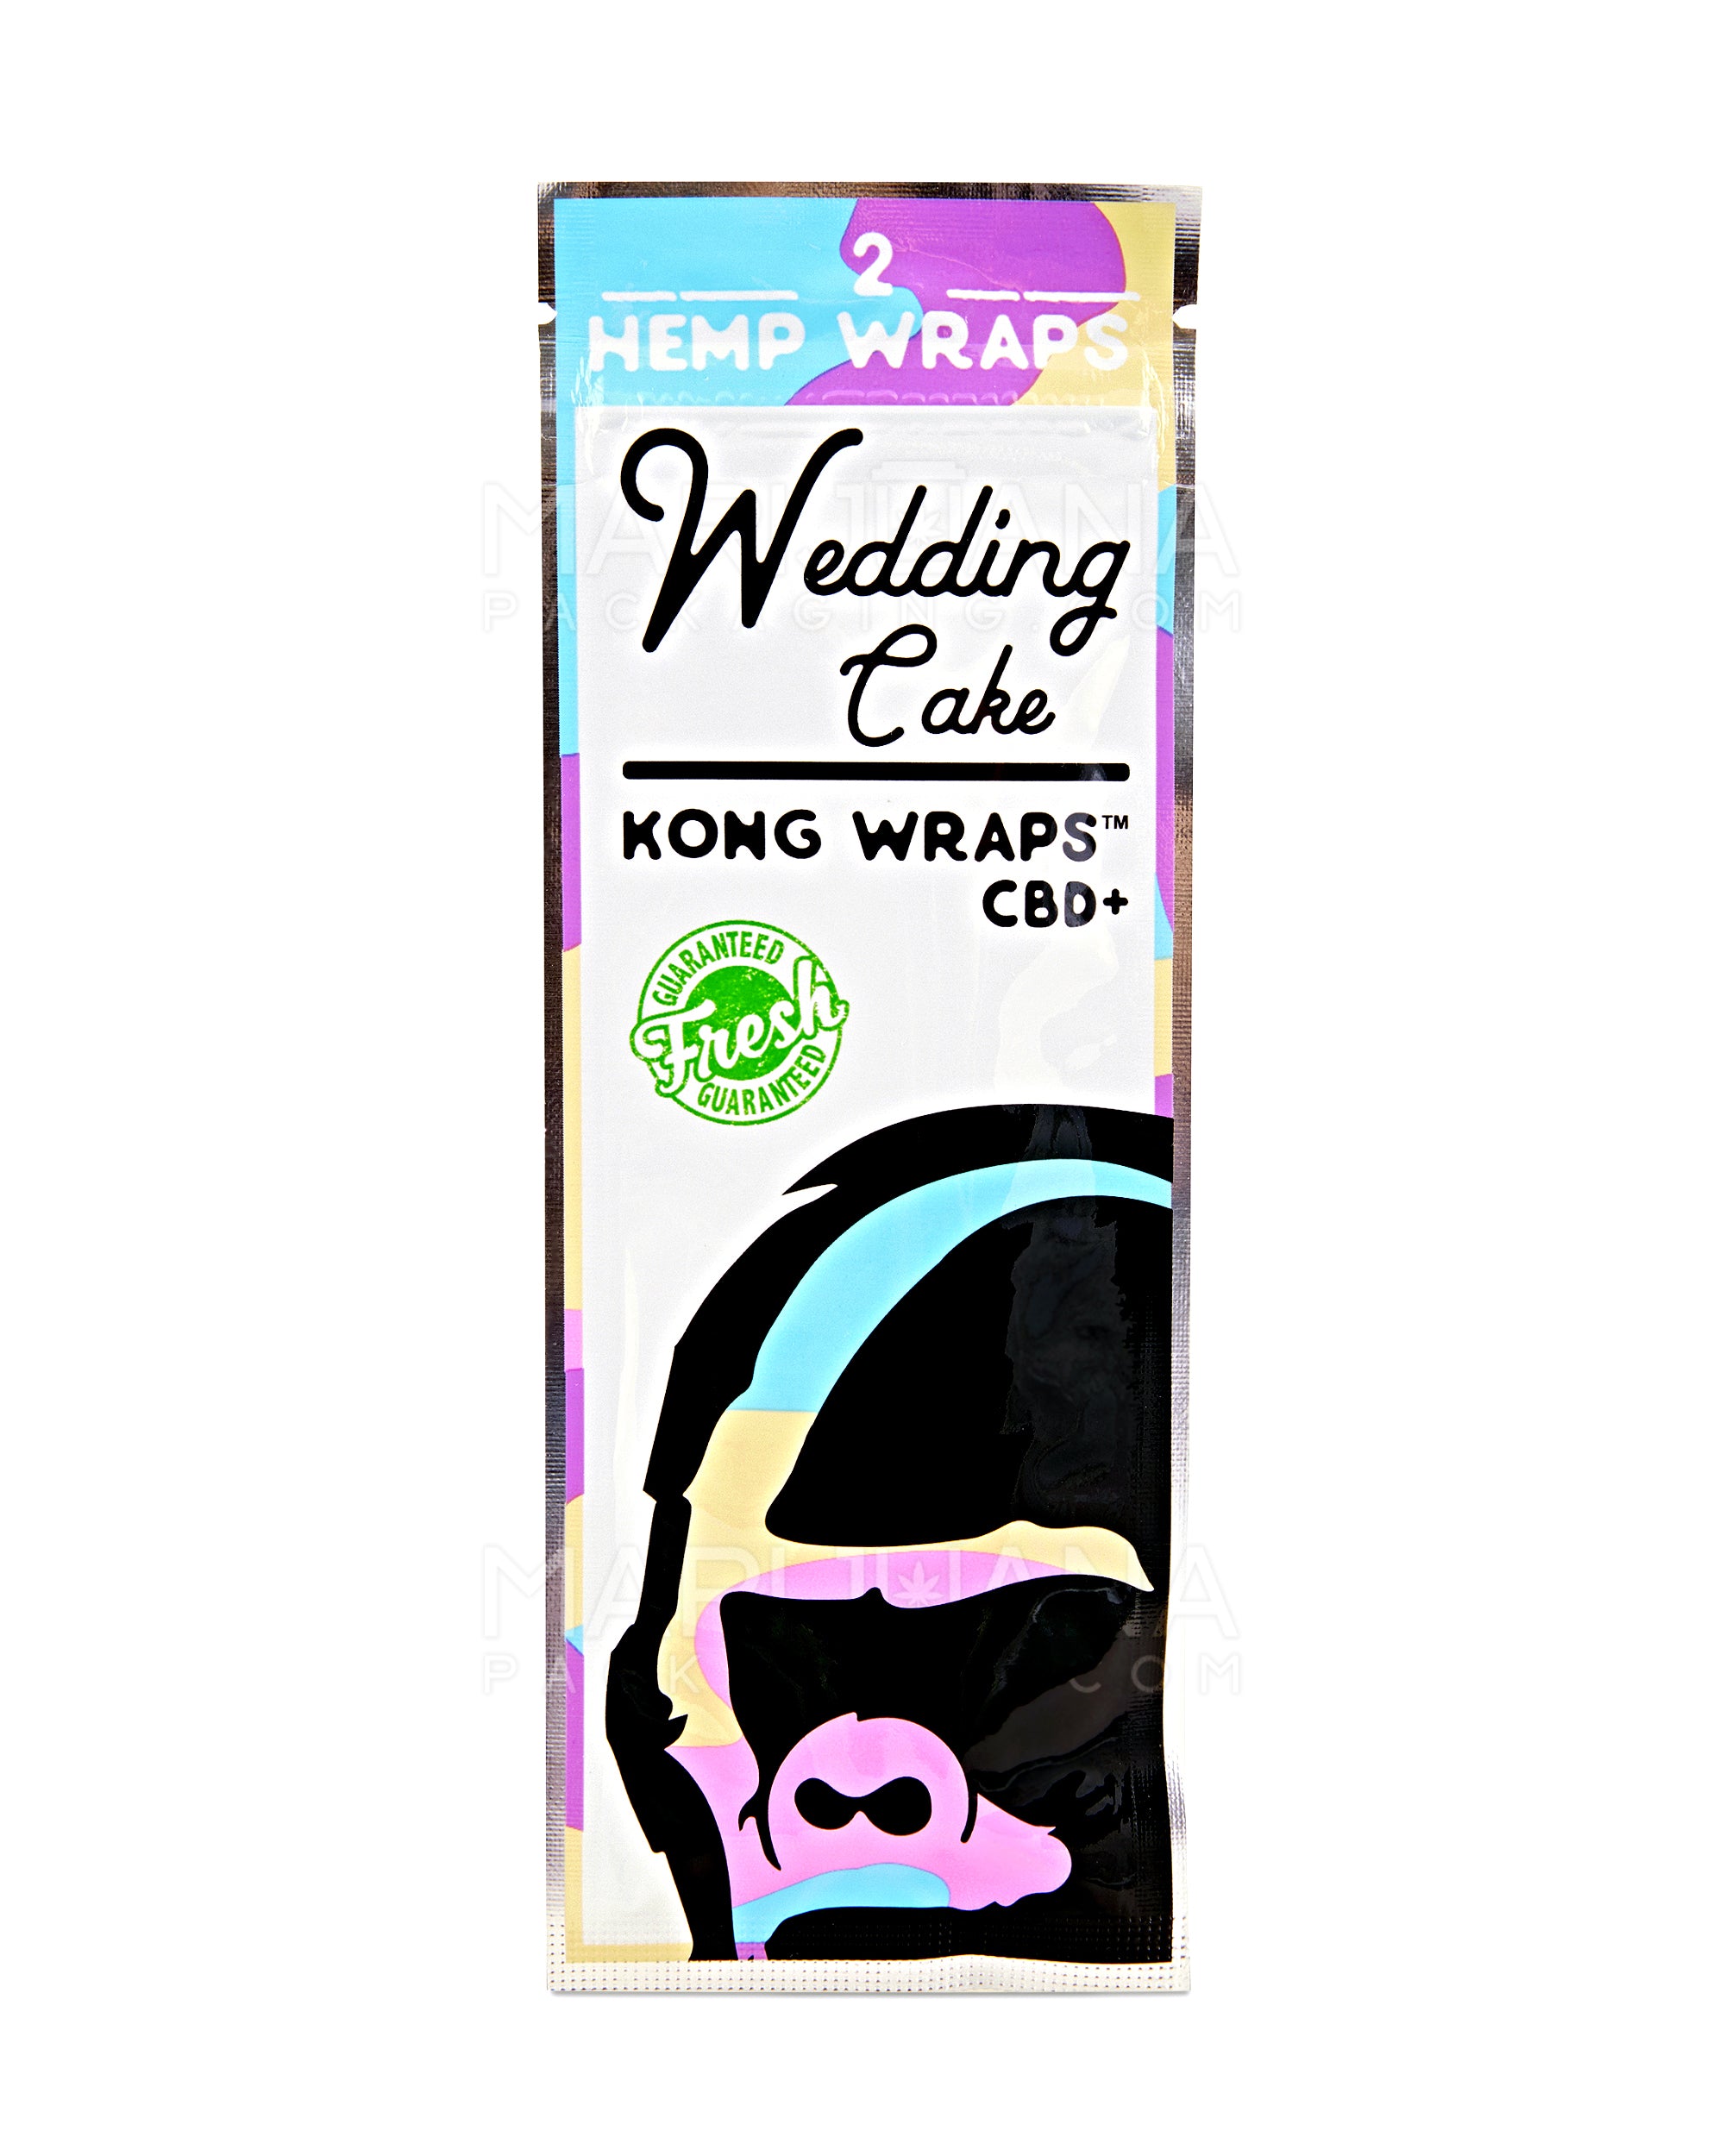 KONG WRAPS | 'Retail Display' Organic Hemp Blunt Wraps | CBD Infused - Wedding Cake - 25 Count